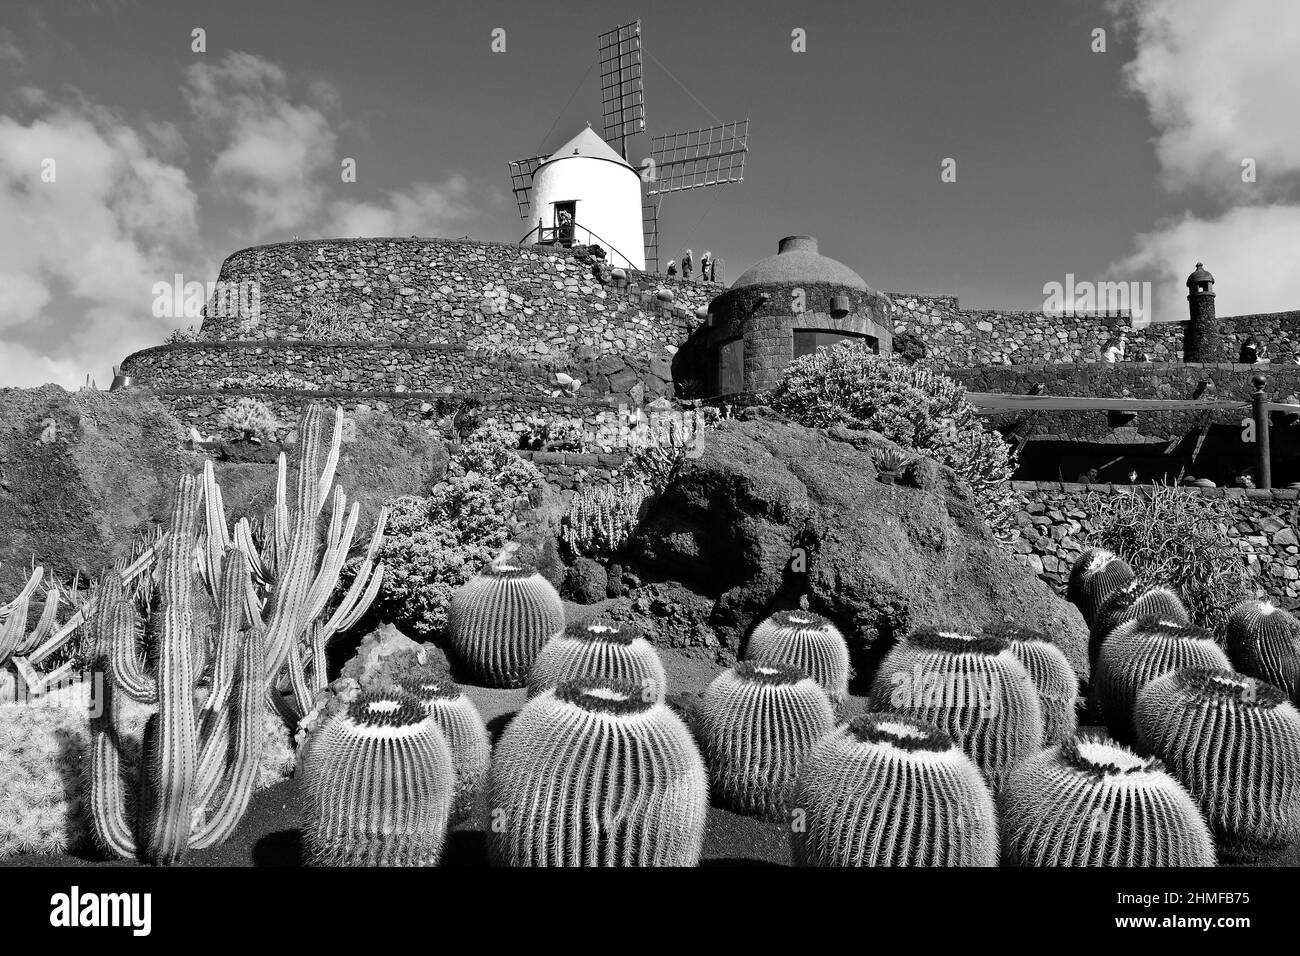 Jardin de Cactus, jardin de cactus à Guatiza, Lanzarote, Espagne Banque D'Images